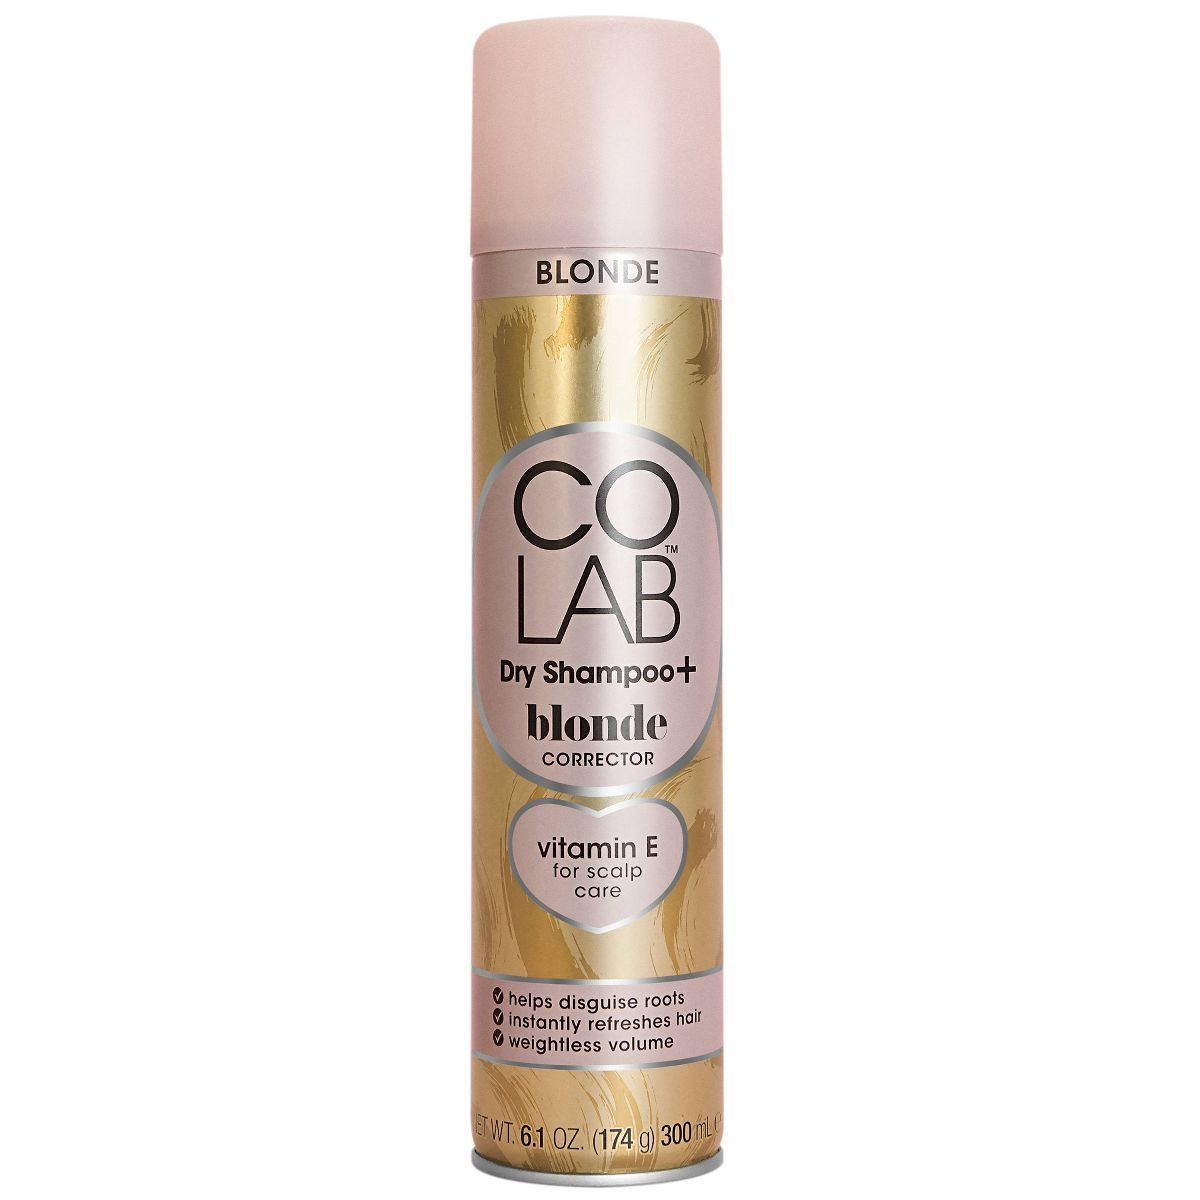 COLAB Blonde Corrector Dry Shampoo - Bergamot and Rose Scented - 6.1oz | Target